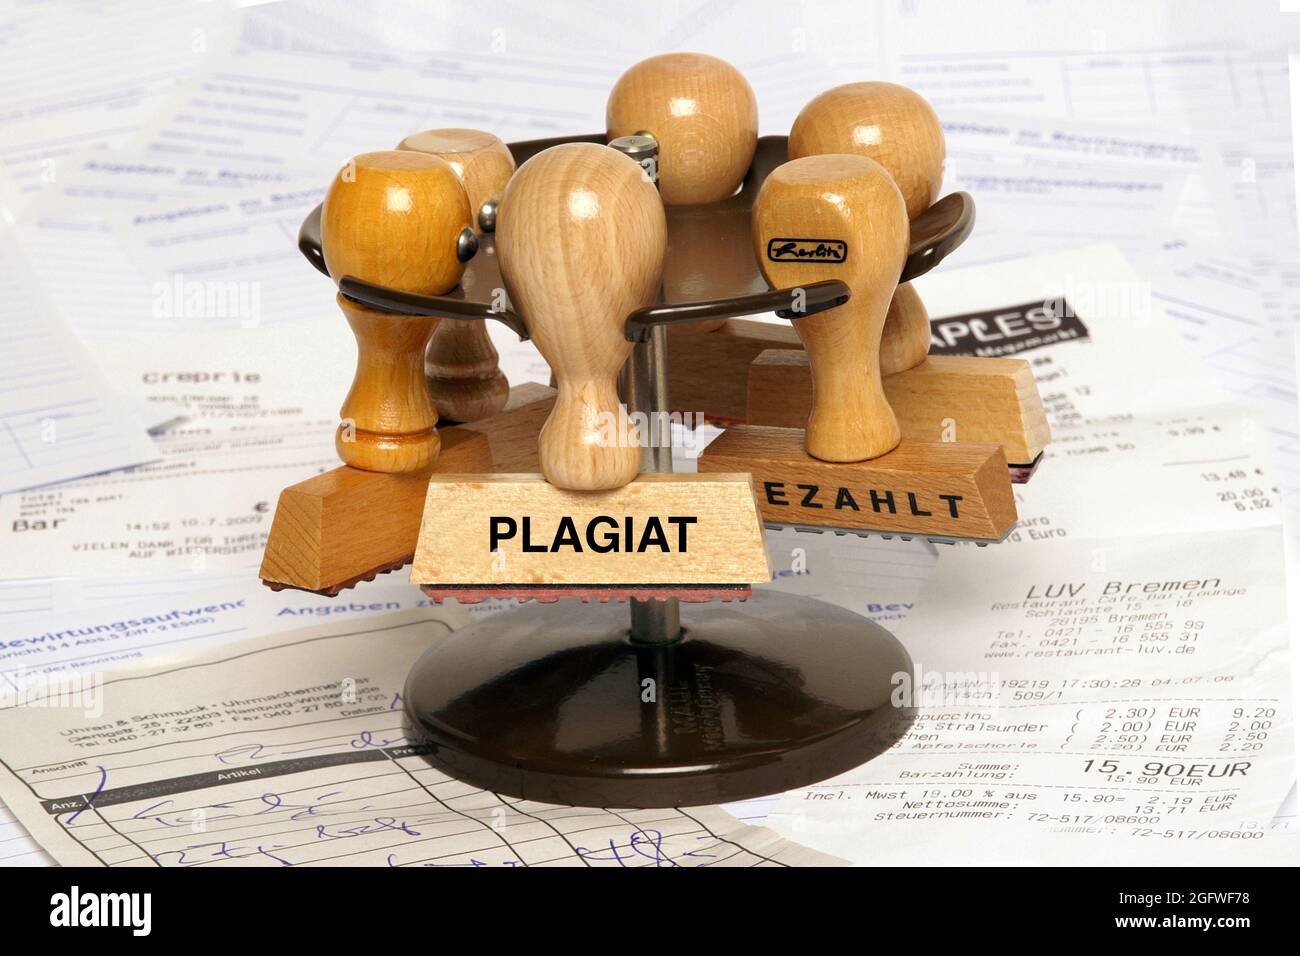 Gummistempelhalter mit Stempel Plagiat, Plagiat, Deutschland Stockfoto